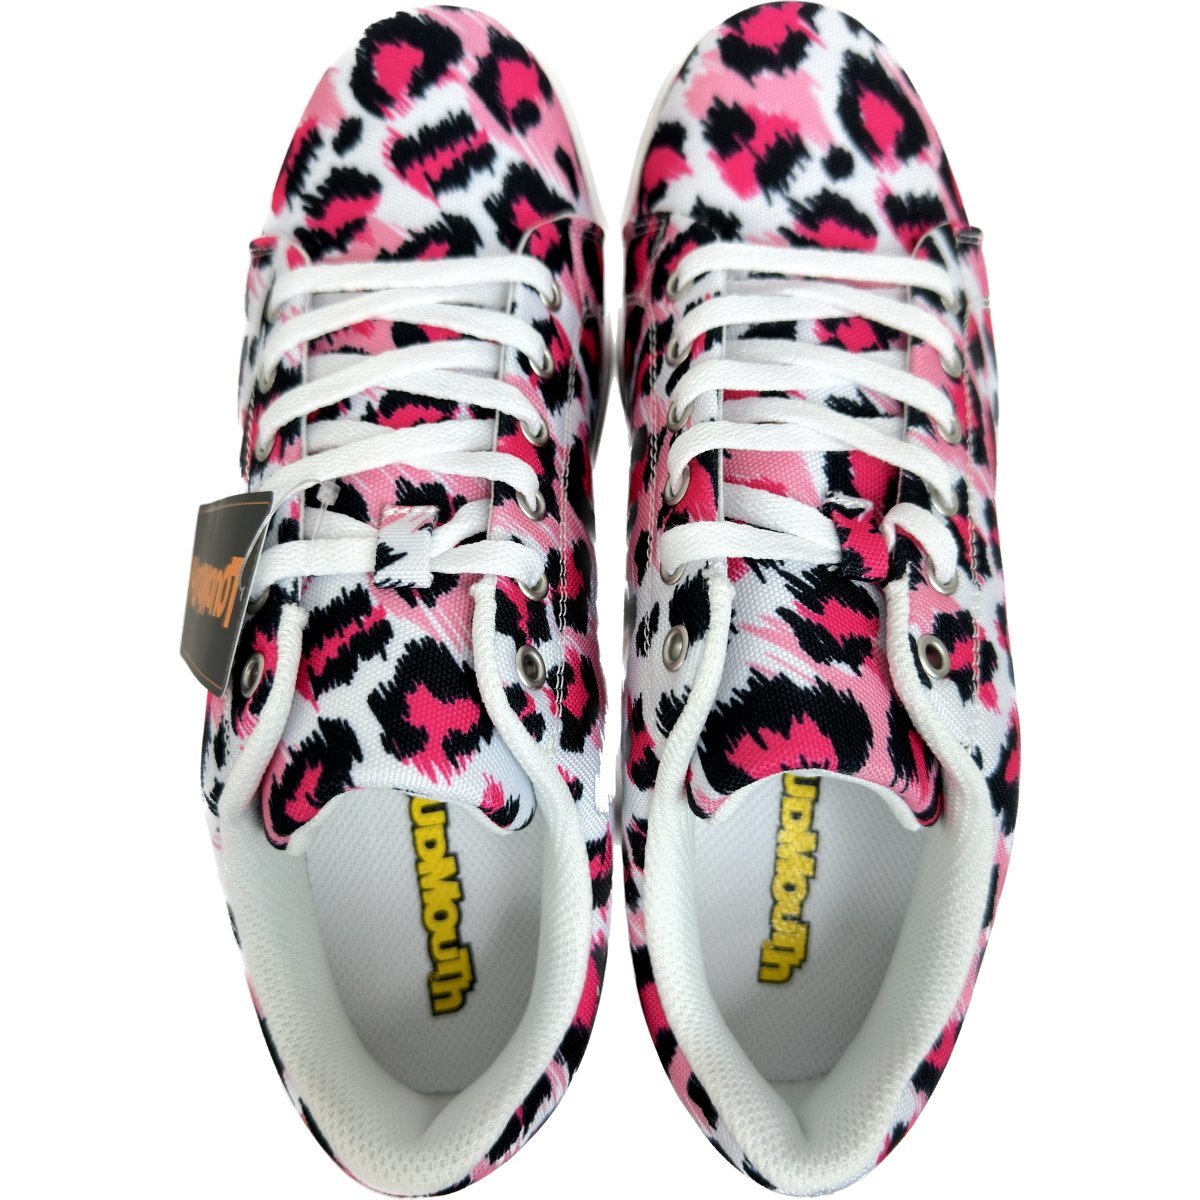 *Loudmouth loud mouse LM-GS0002 spike less golf shoes Pink Leopard(275)26.5cm * pink Leopard 